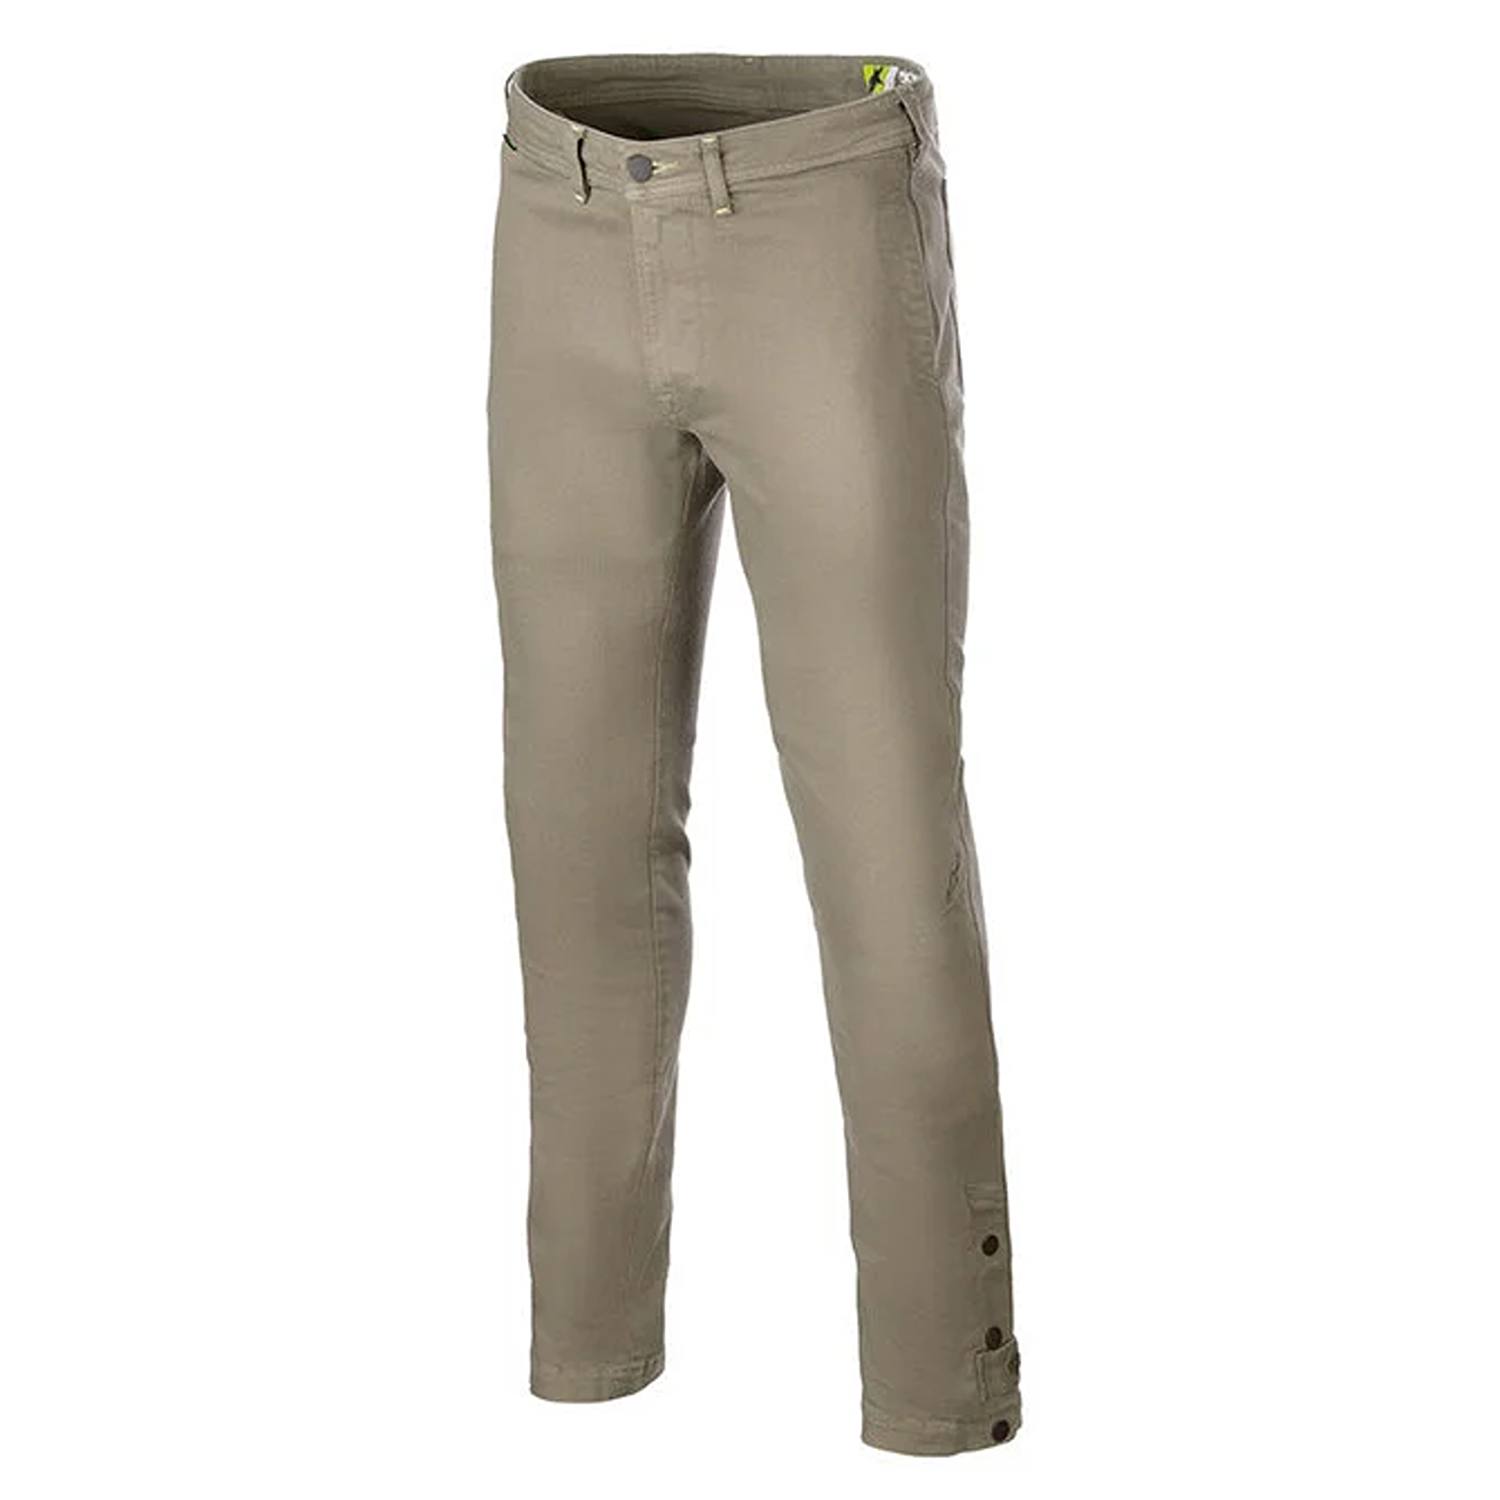 Image of Alpinestars Stratos Regular Fit Tech Riding Pants Military Green Size 32 ID 8059347150222